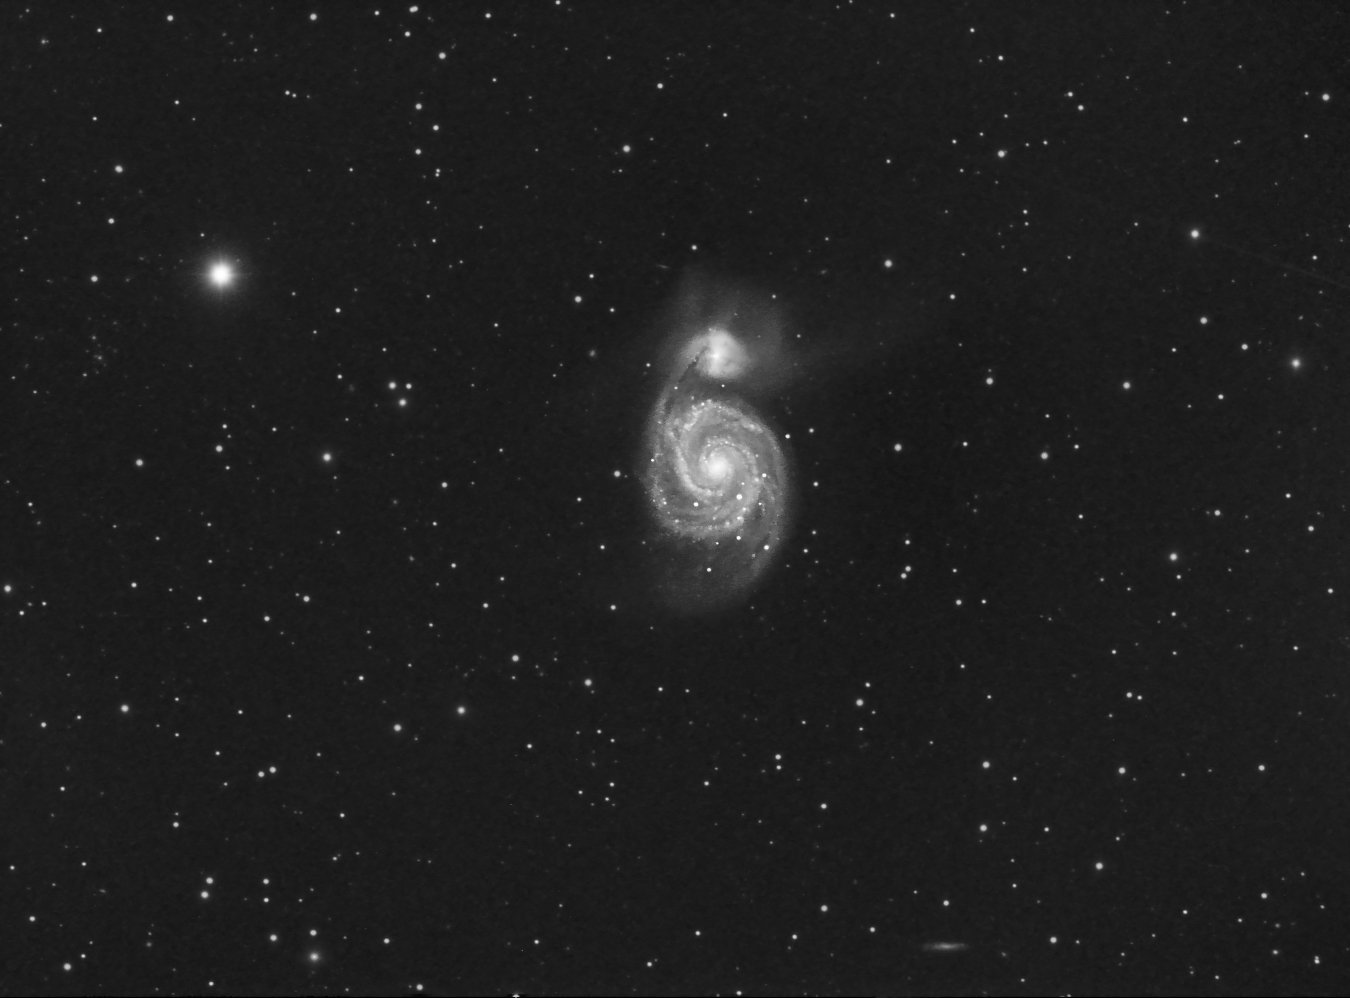 M51, Whirlpool galaxy